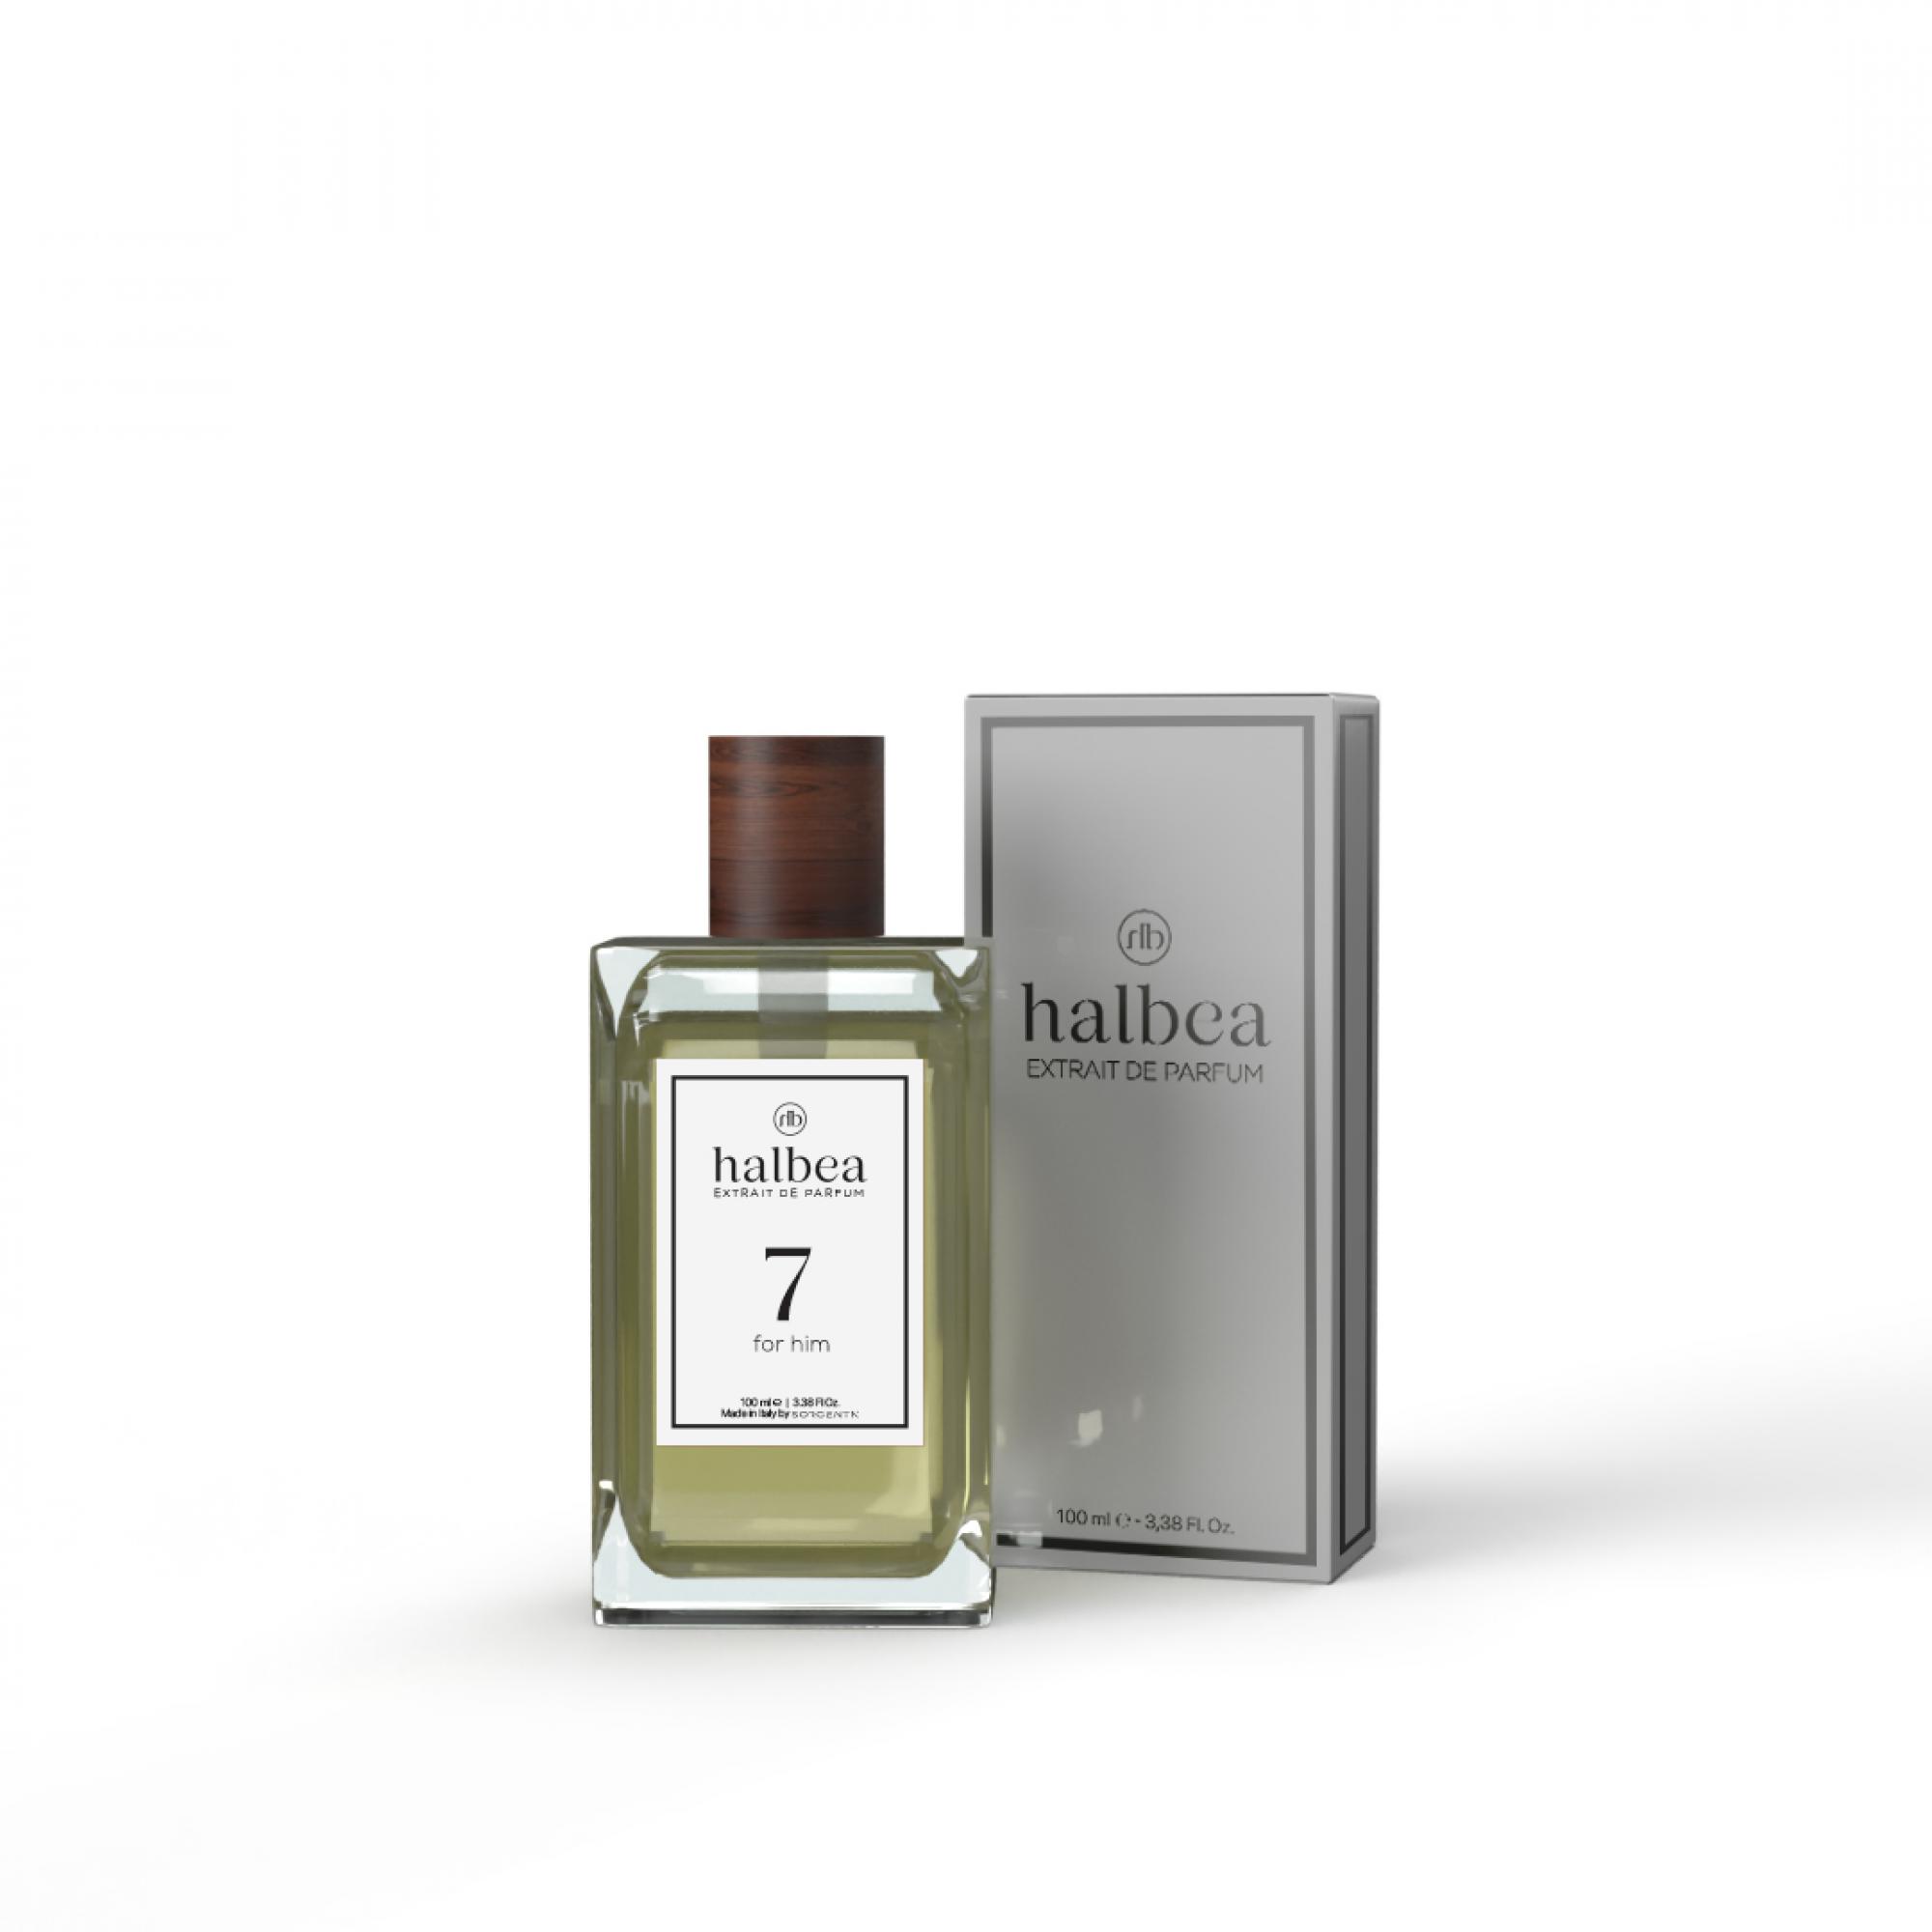 Halbea Parfum Nr. 7 insp. by Calvin Klein One Sorgenta duftzwilling 100ml